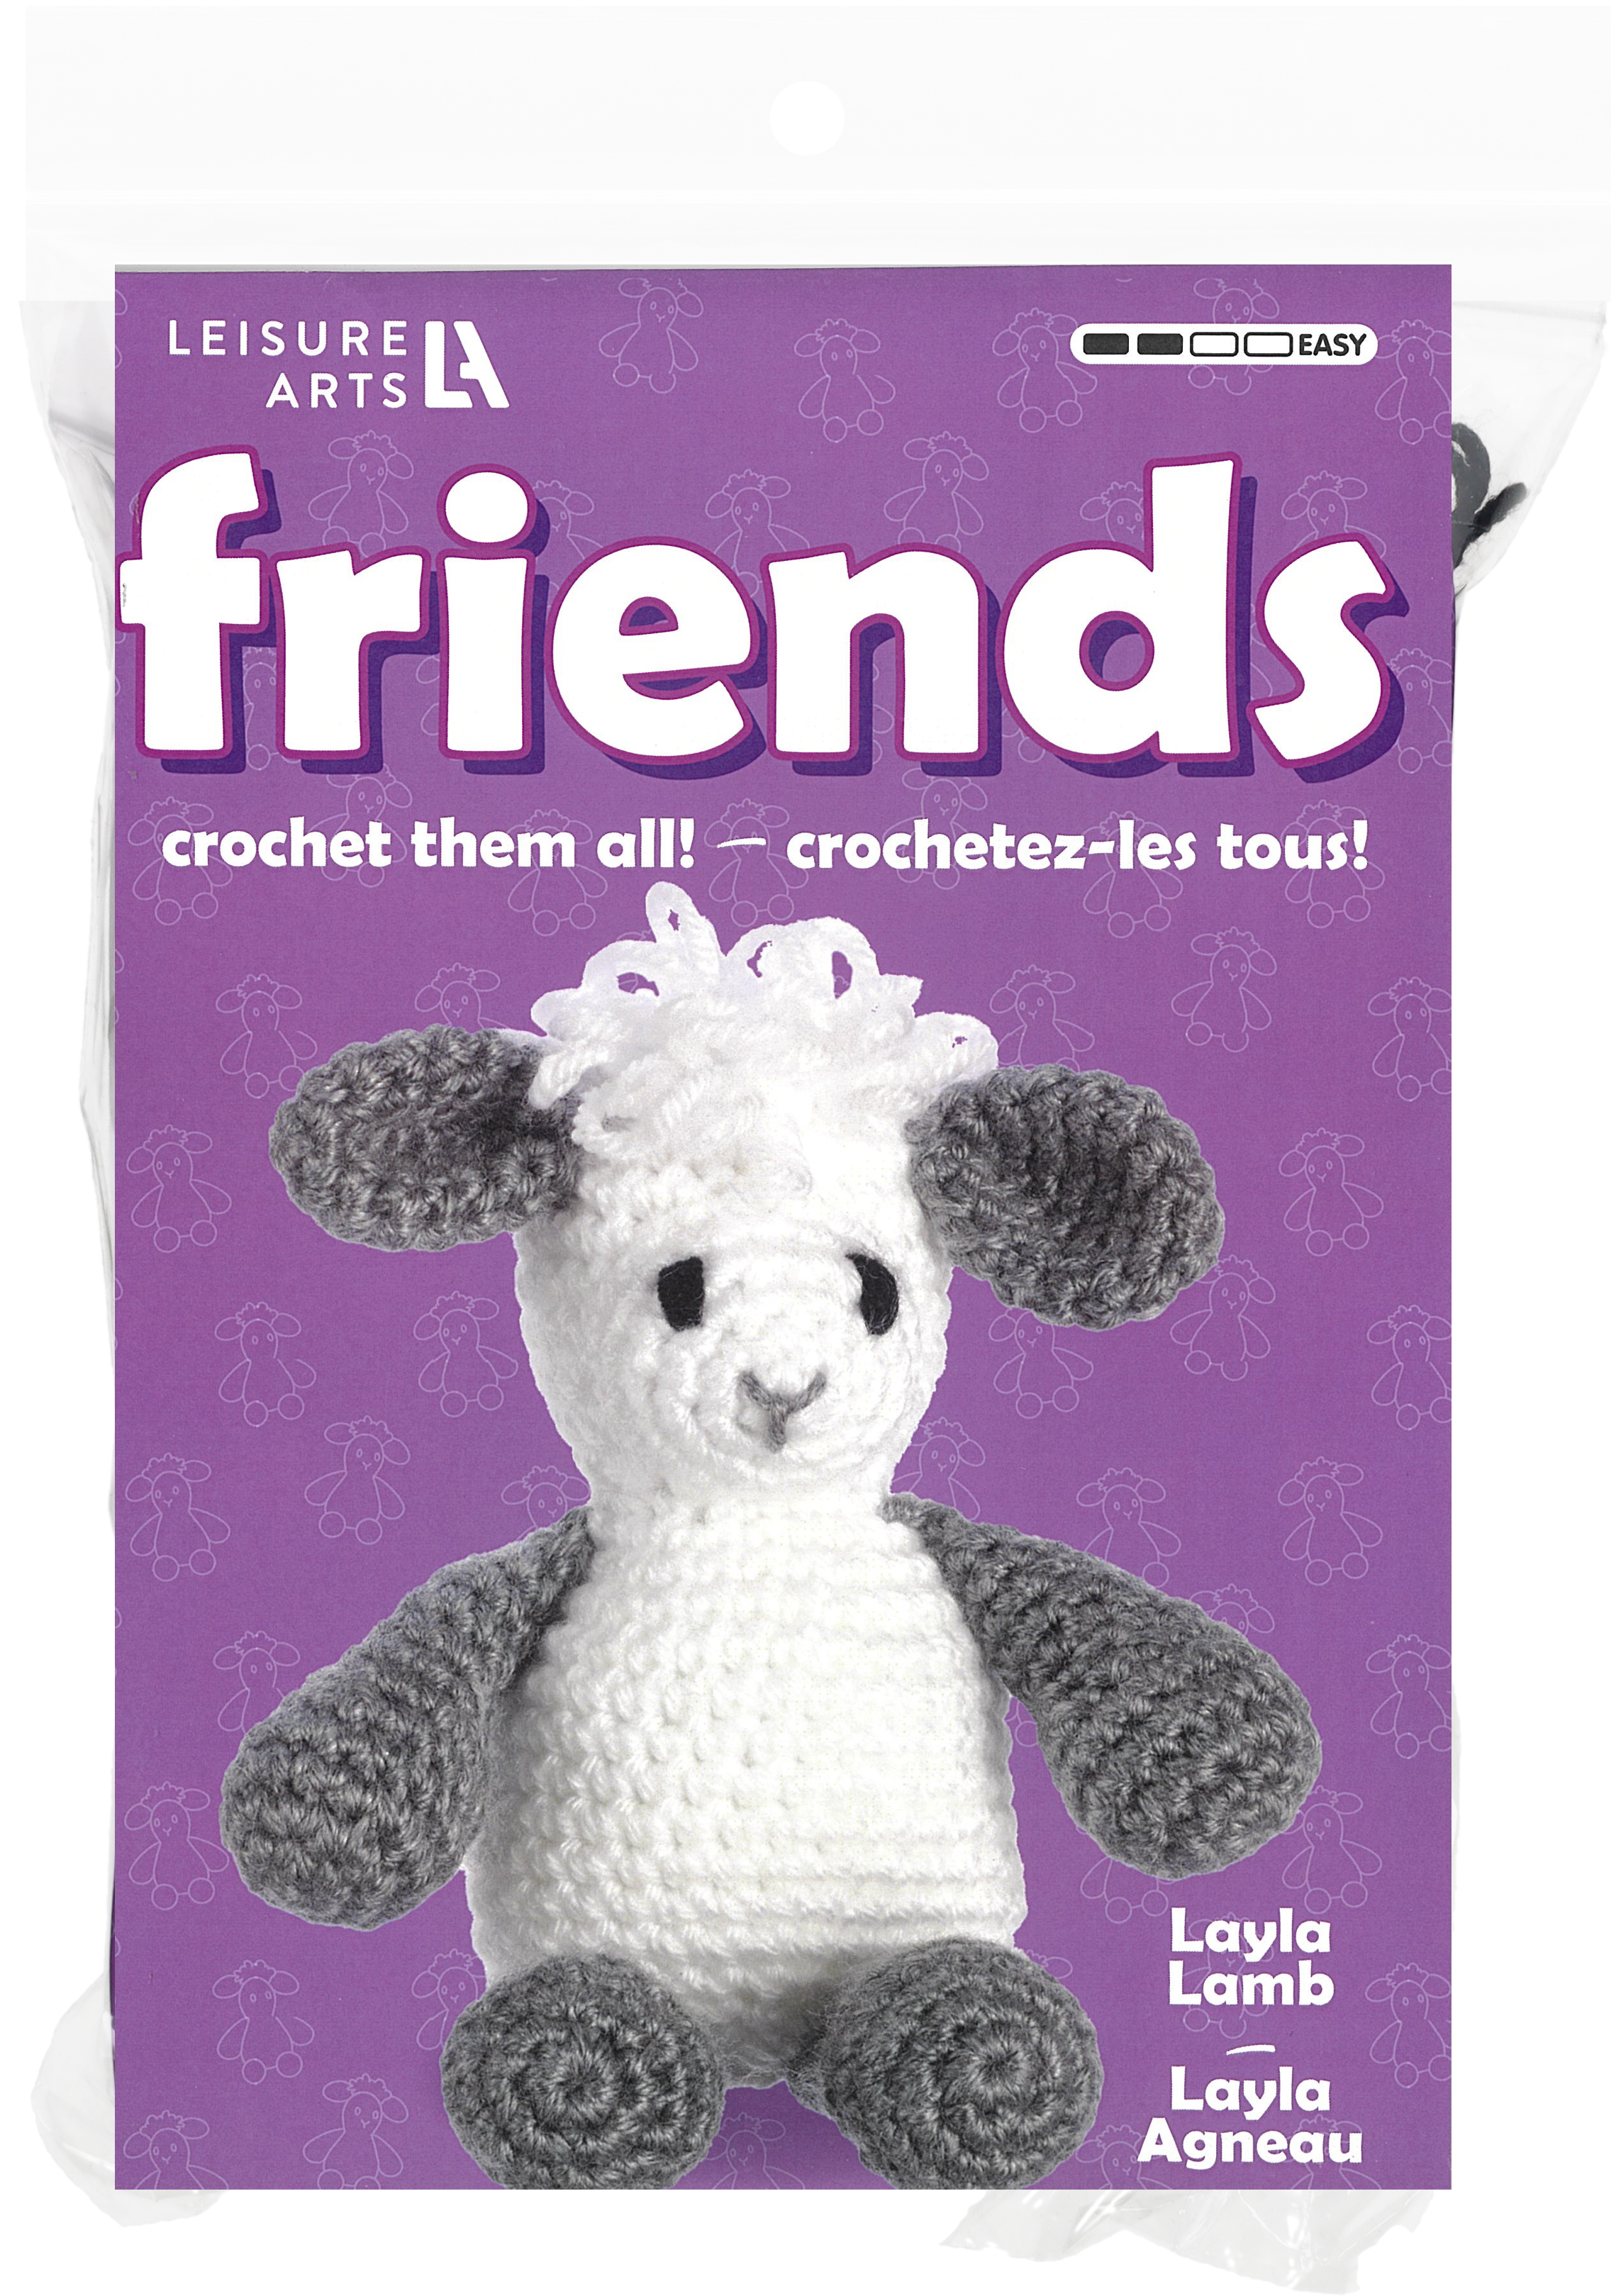 LEISURE ARTS Little Crochet Friend Animals Crochet Kit, Elephant, 8,  Complete Crochet kit, Learn to Crochet Animal Starter kit for All Ages,  Includes